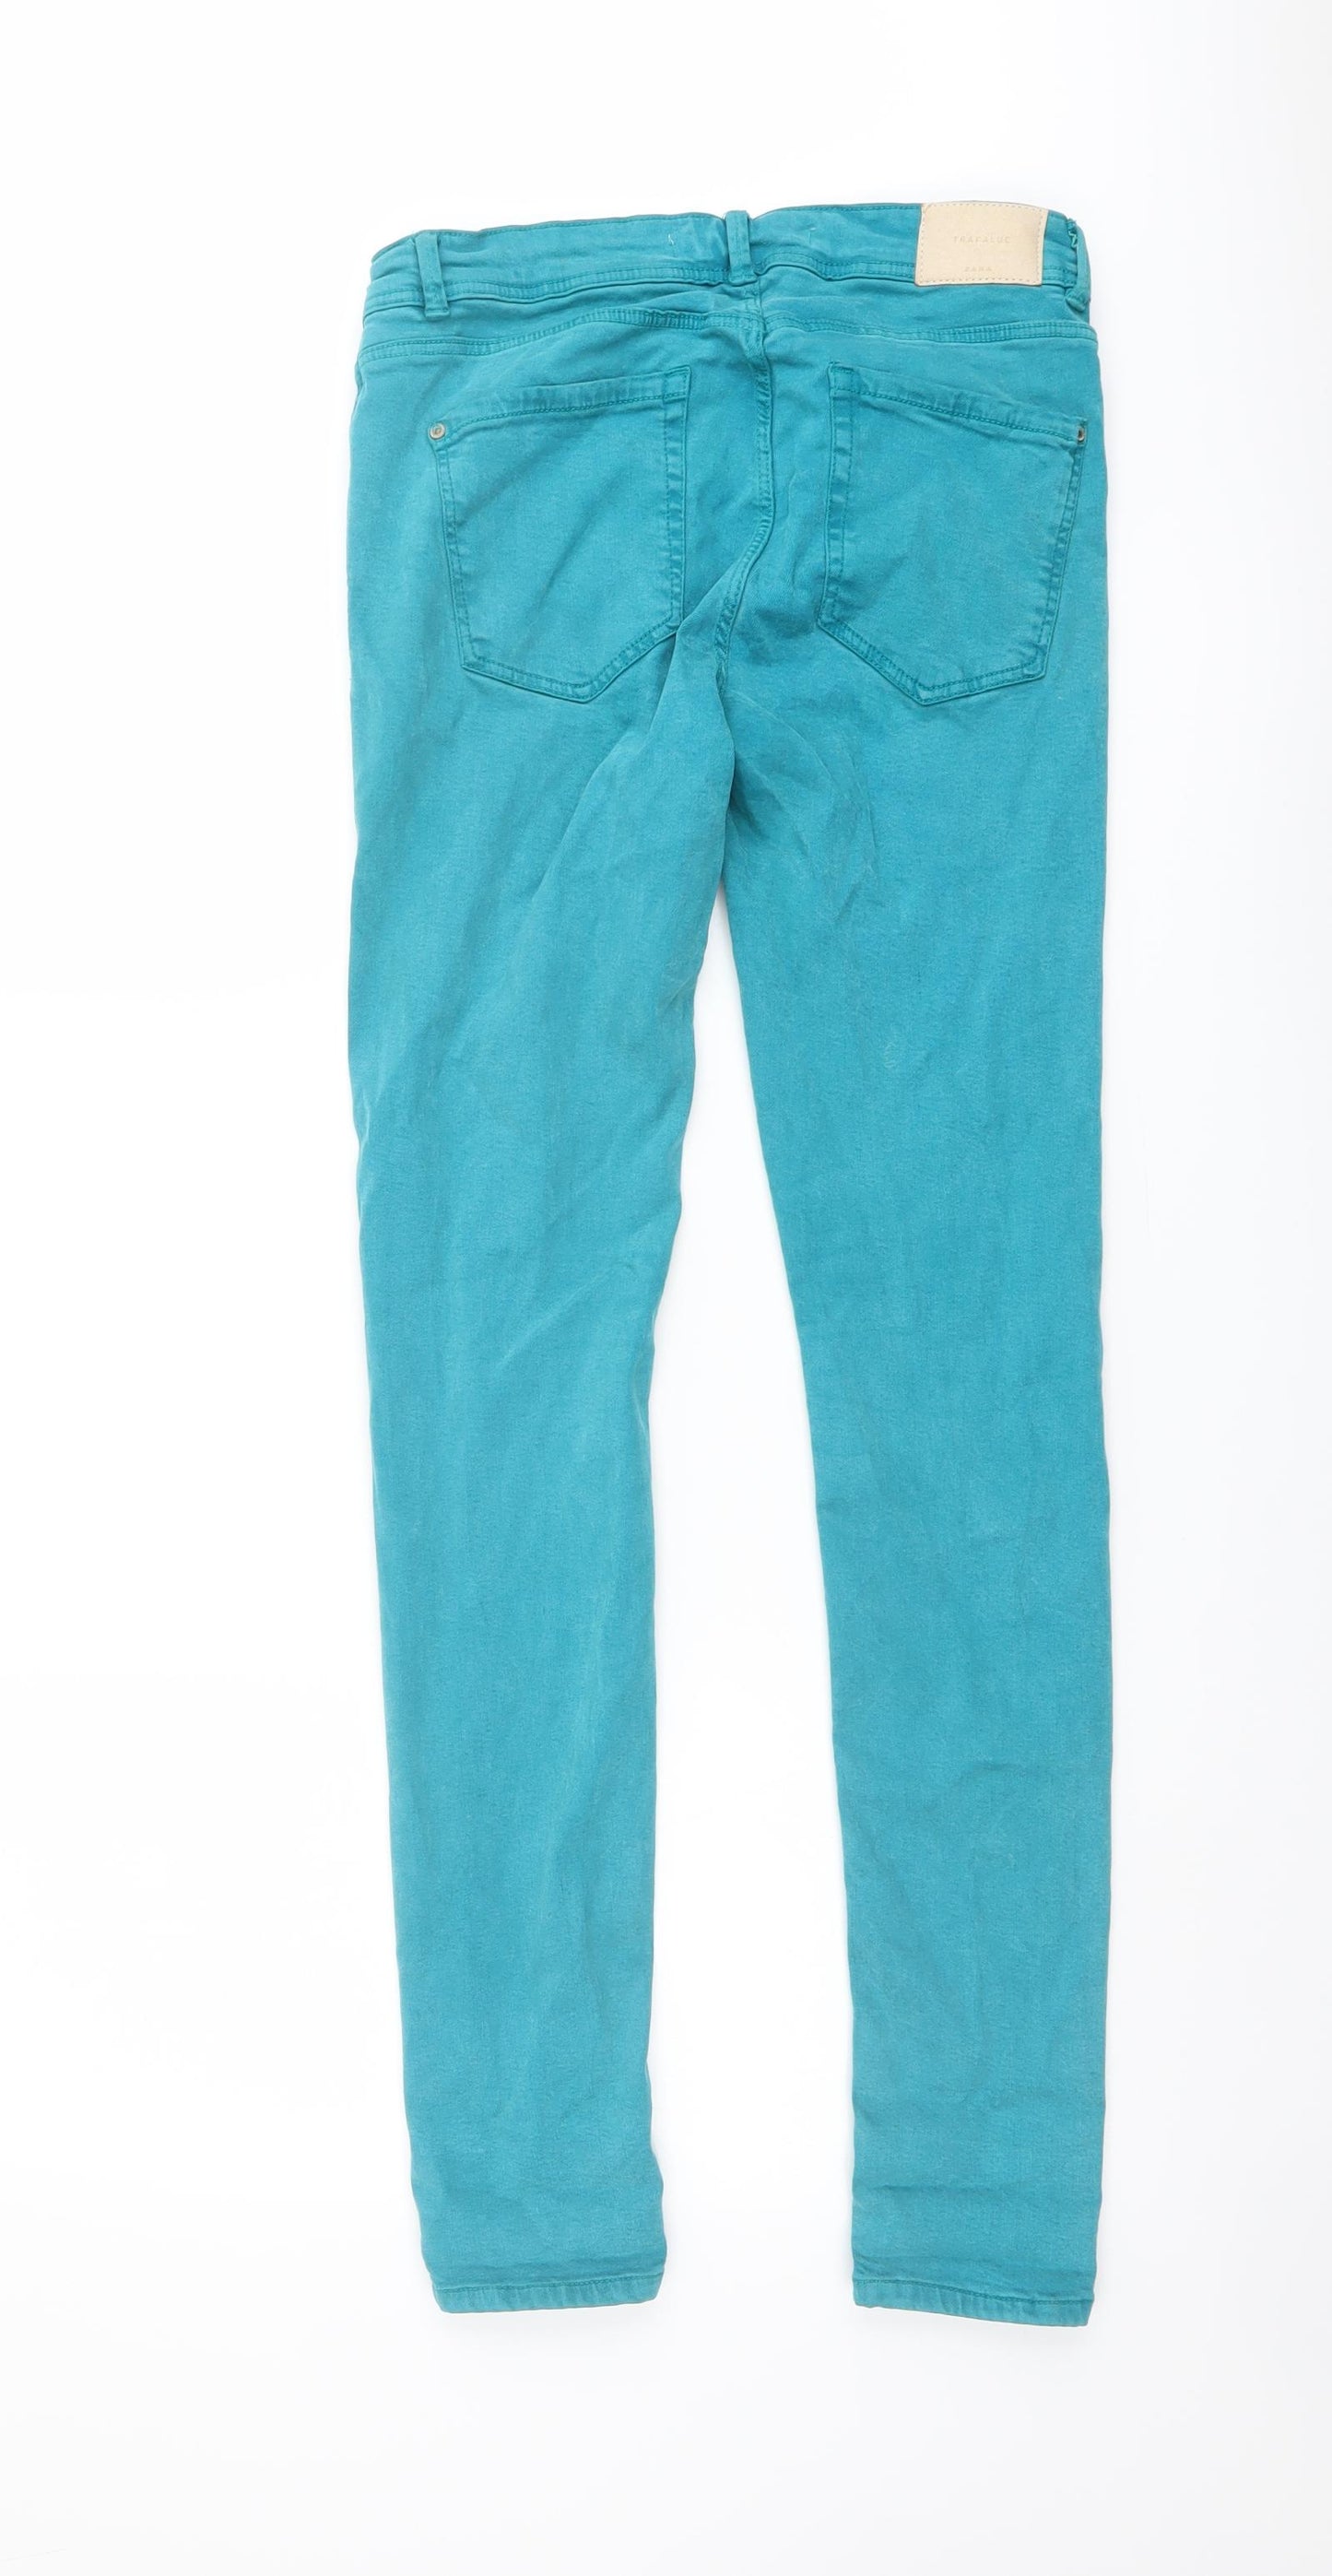 Zara Womens Green Cotton Straight Jeans Size 10 L30 in Regular Button